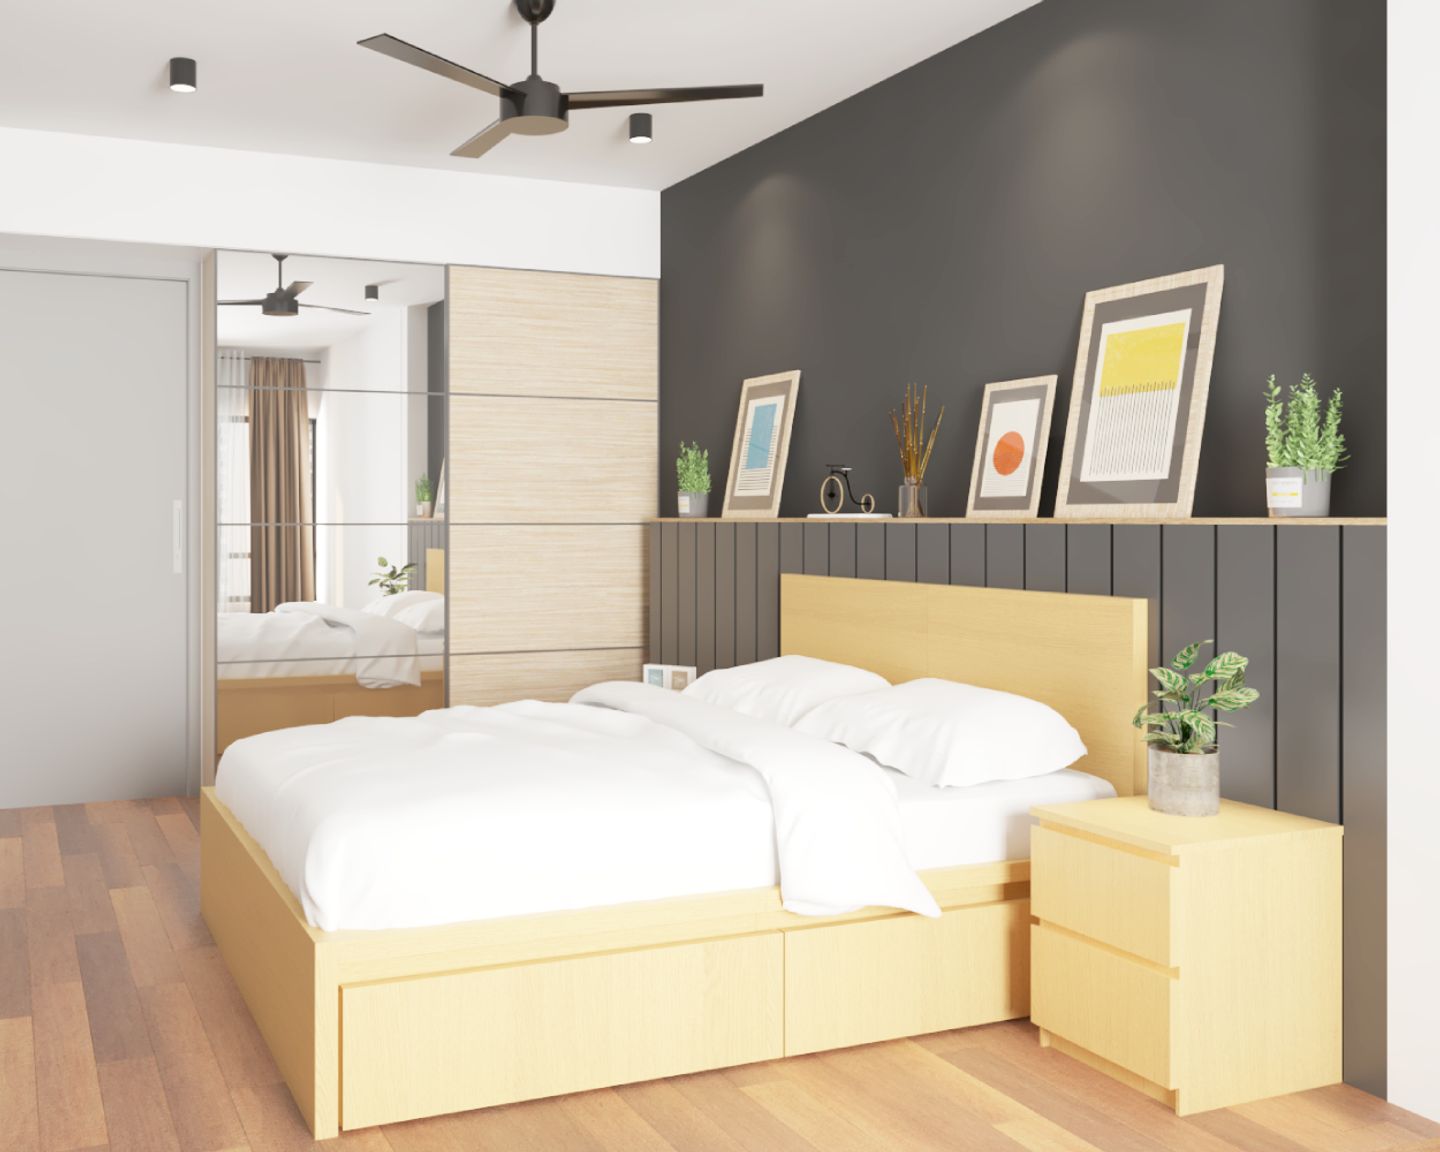 Bedroom Wall Panelling Design - Livspace